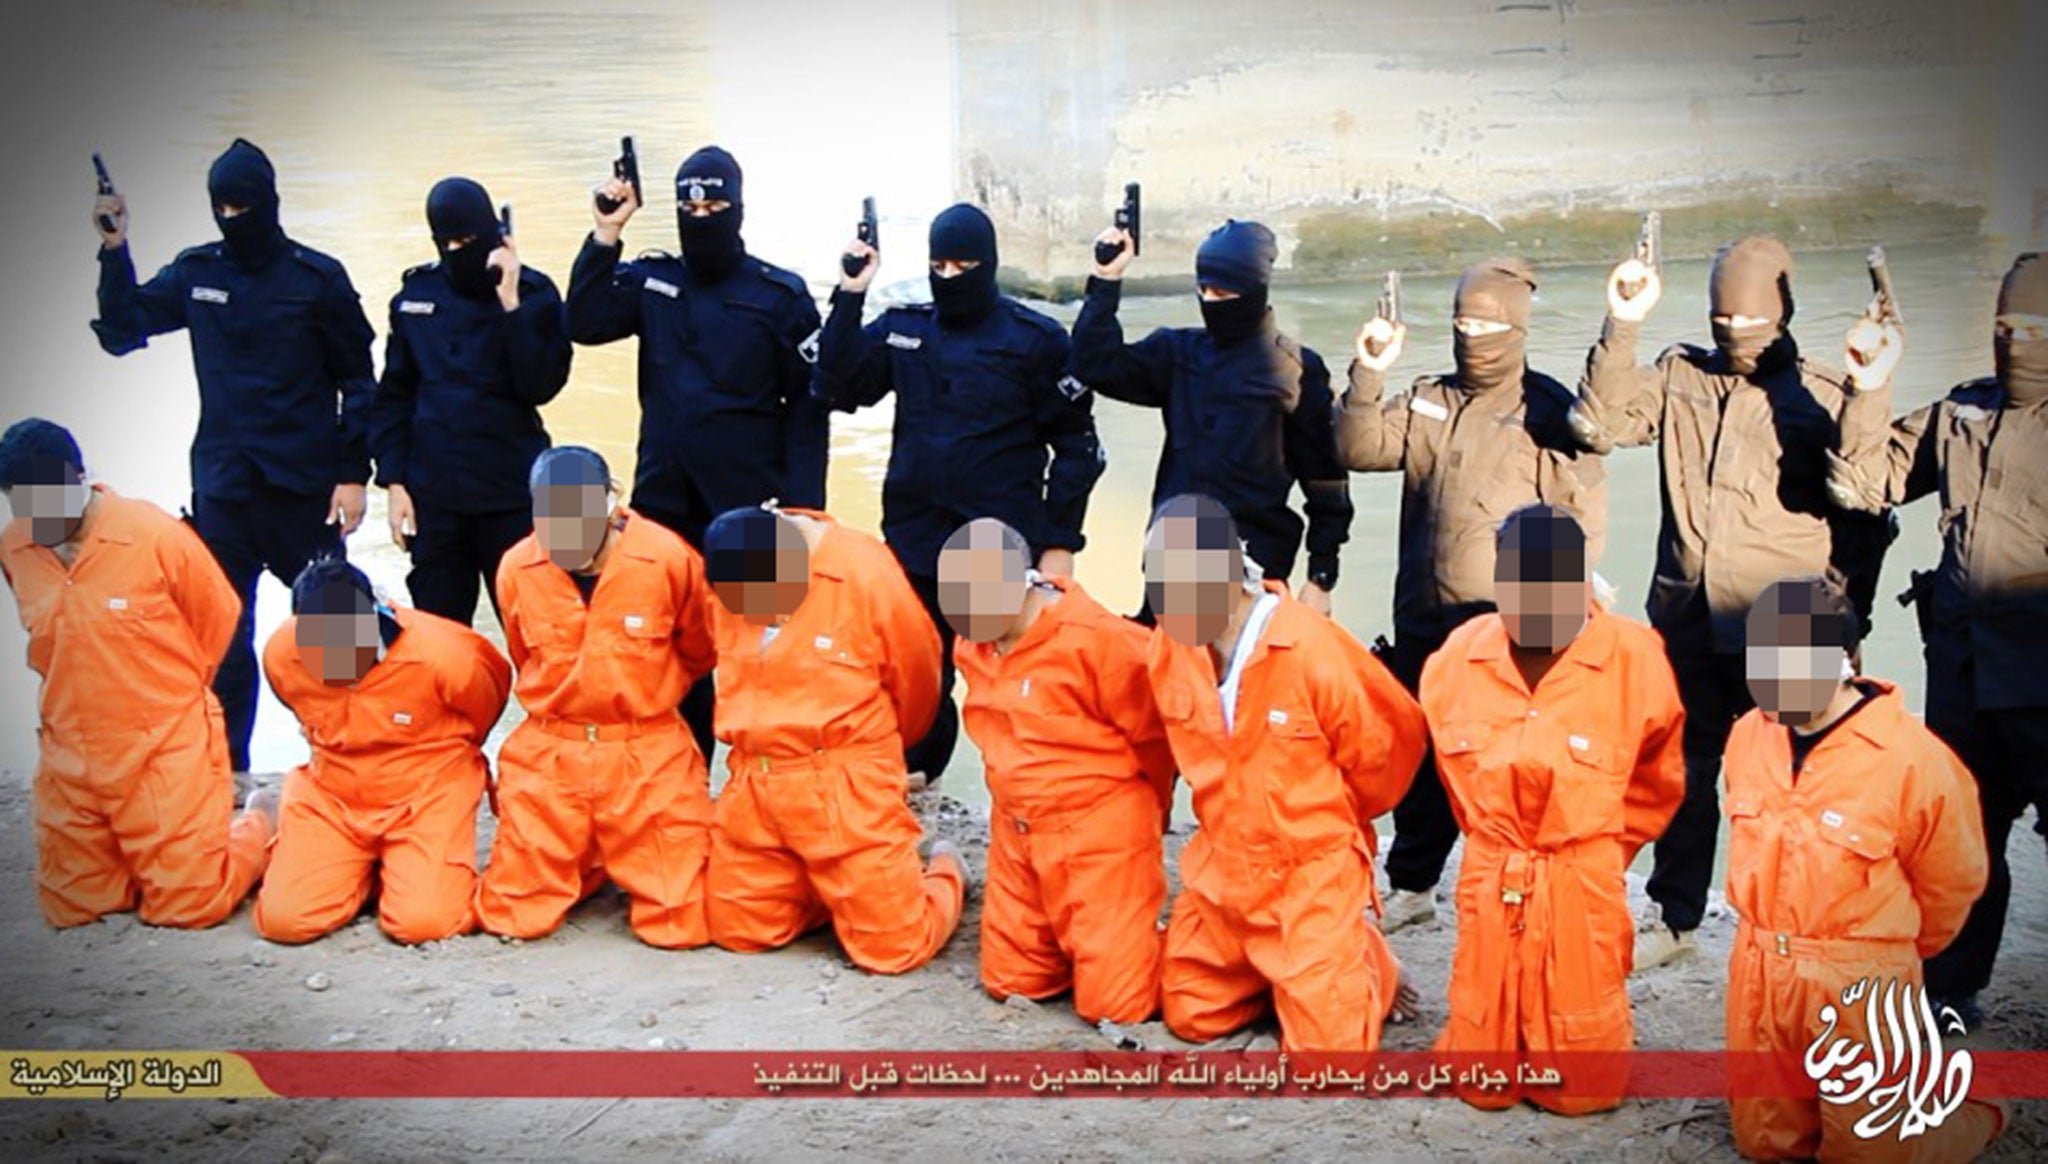 Eight Iraqi men were shot by Isis militants